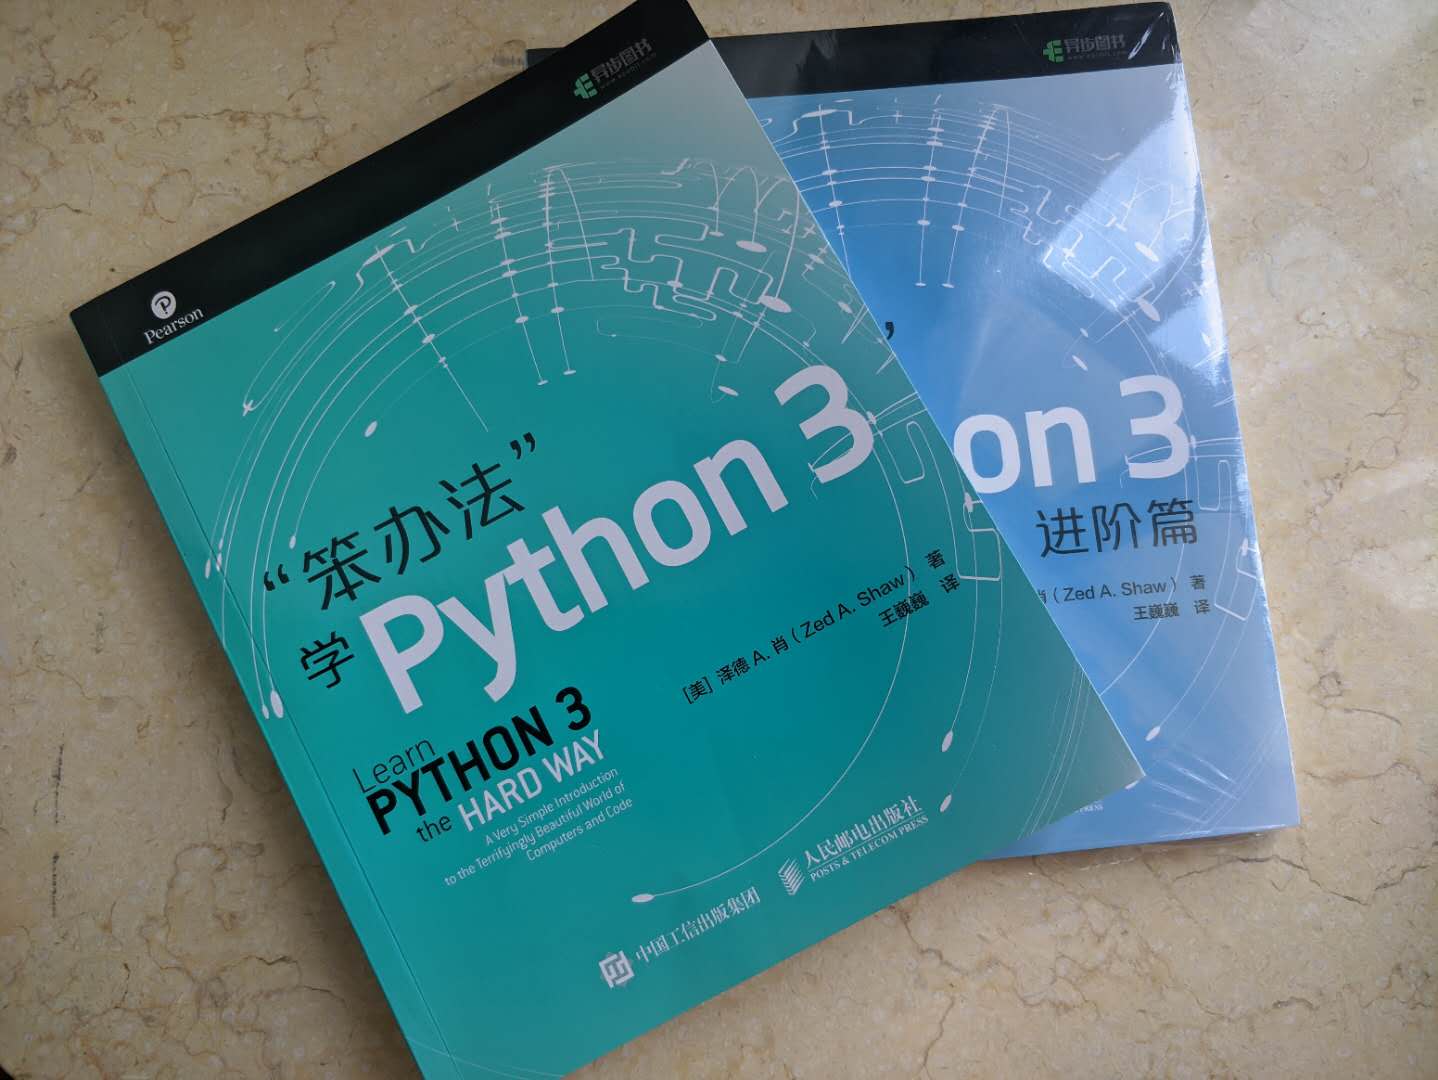 笨方法学Python3